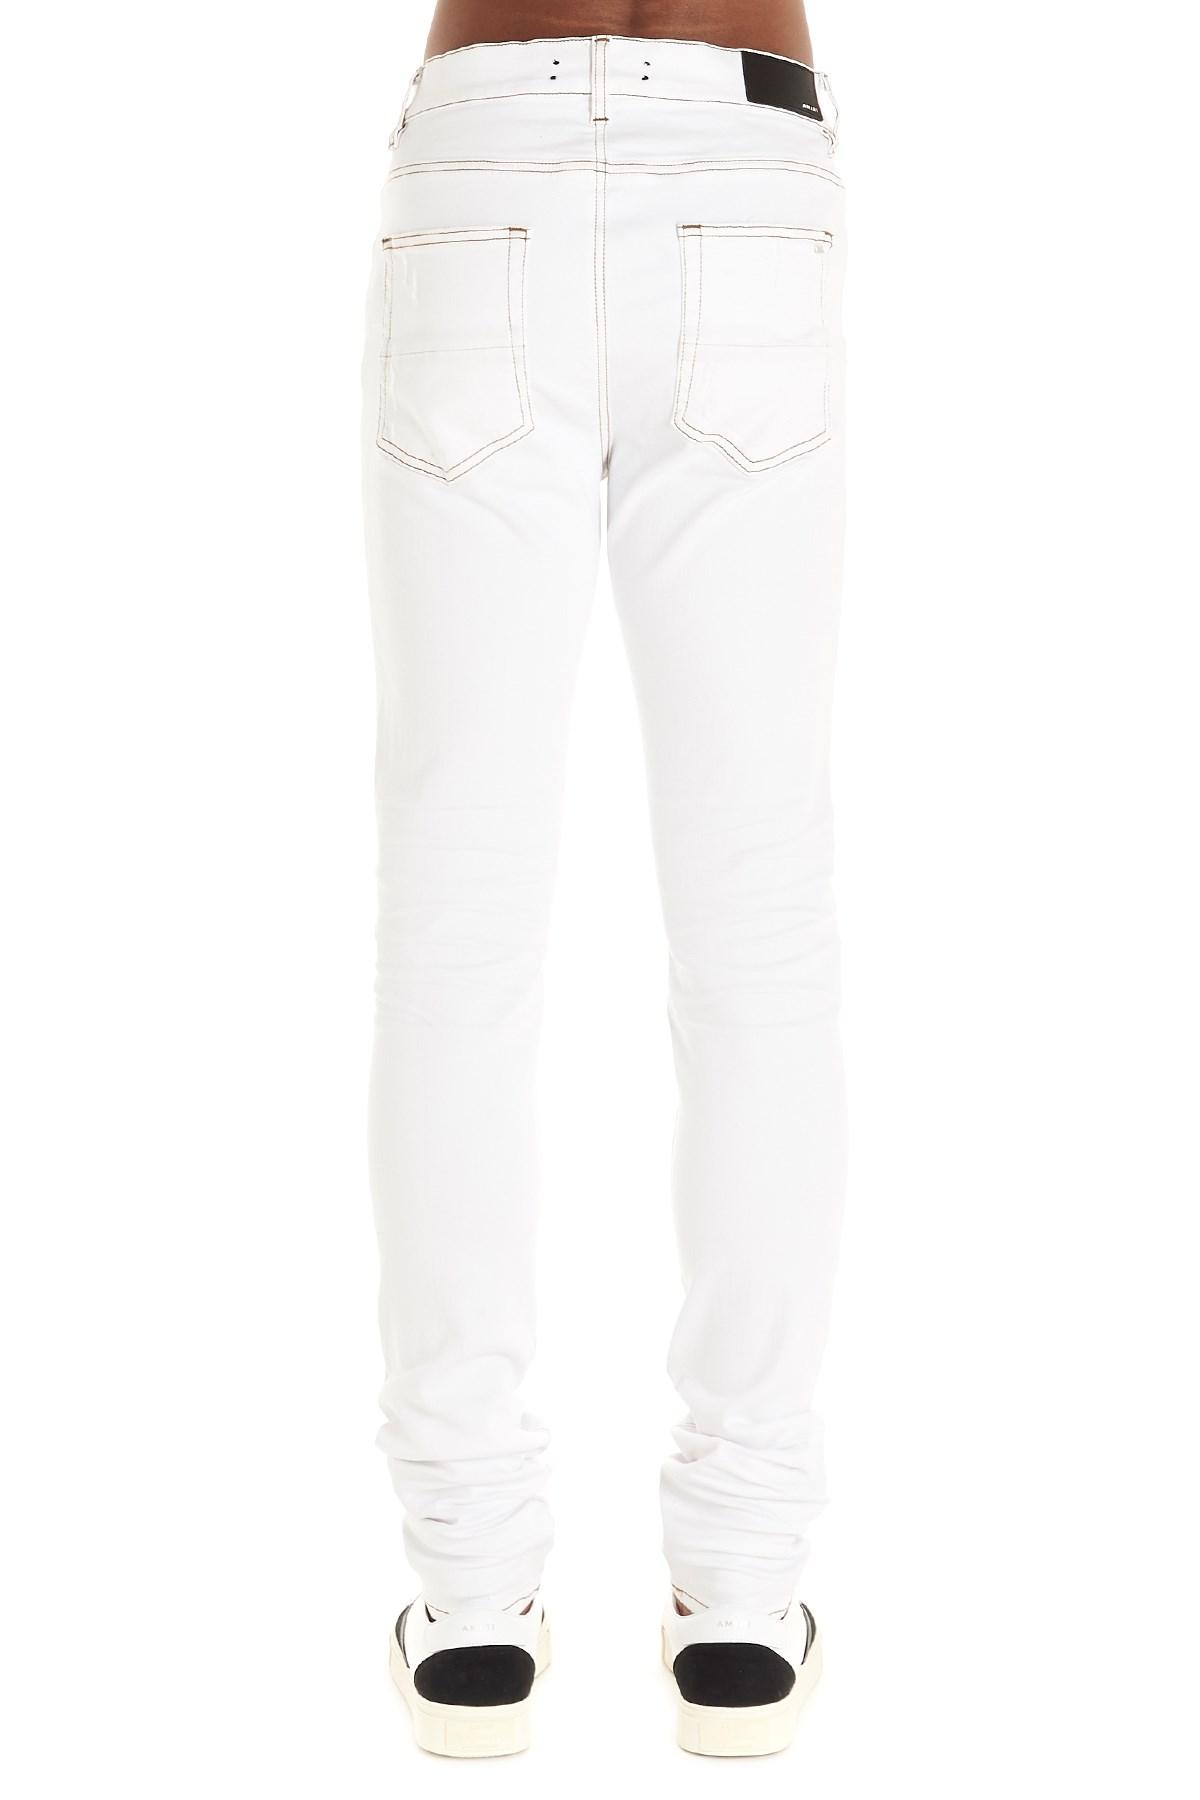 Amiri Denim Slash Skinny-leg Jeans in White for Men - Save 8% - Lyst